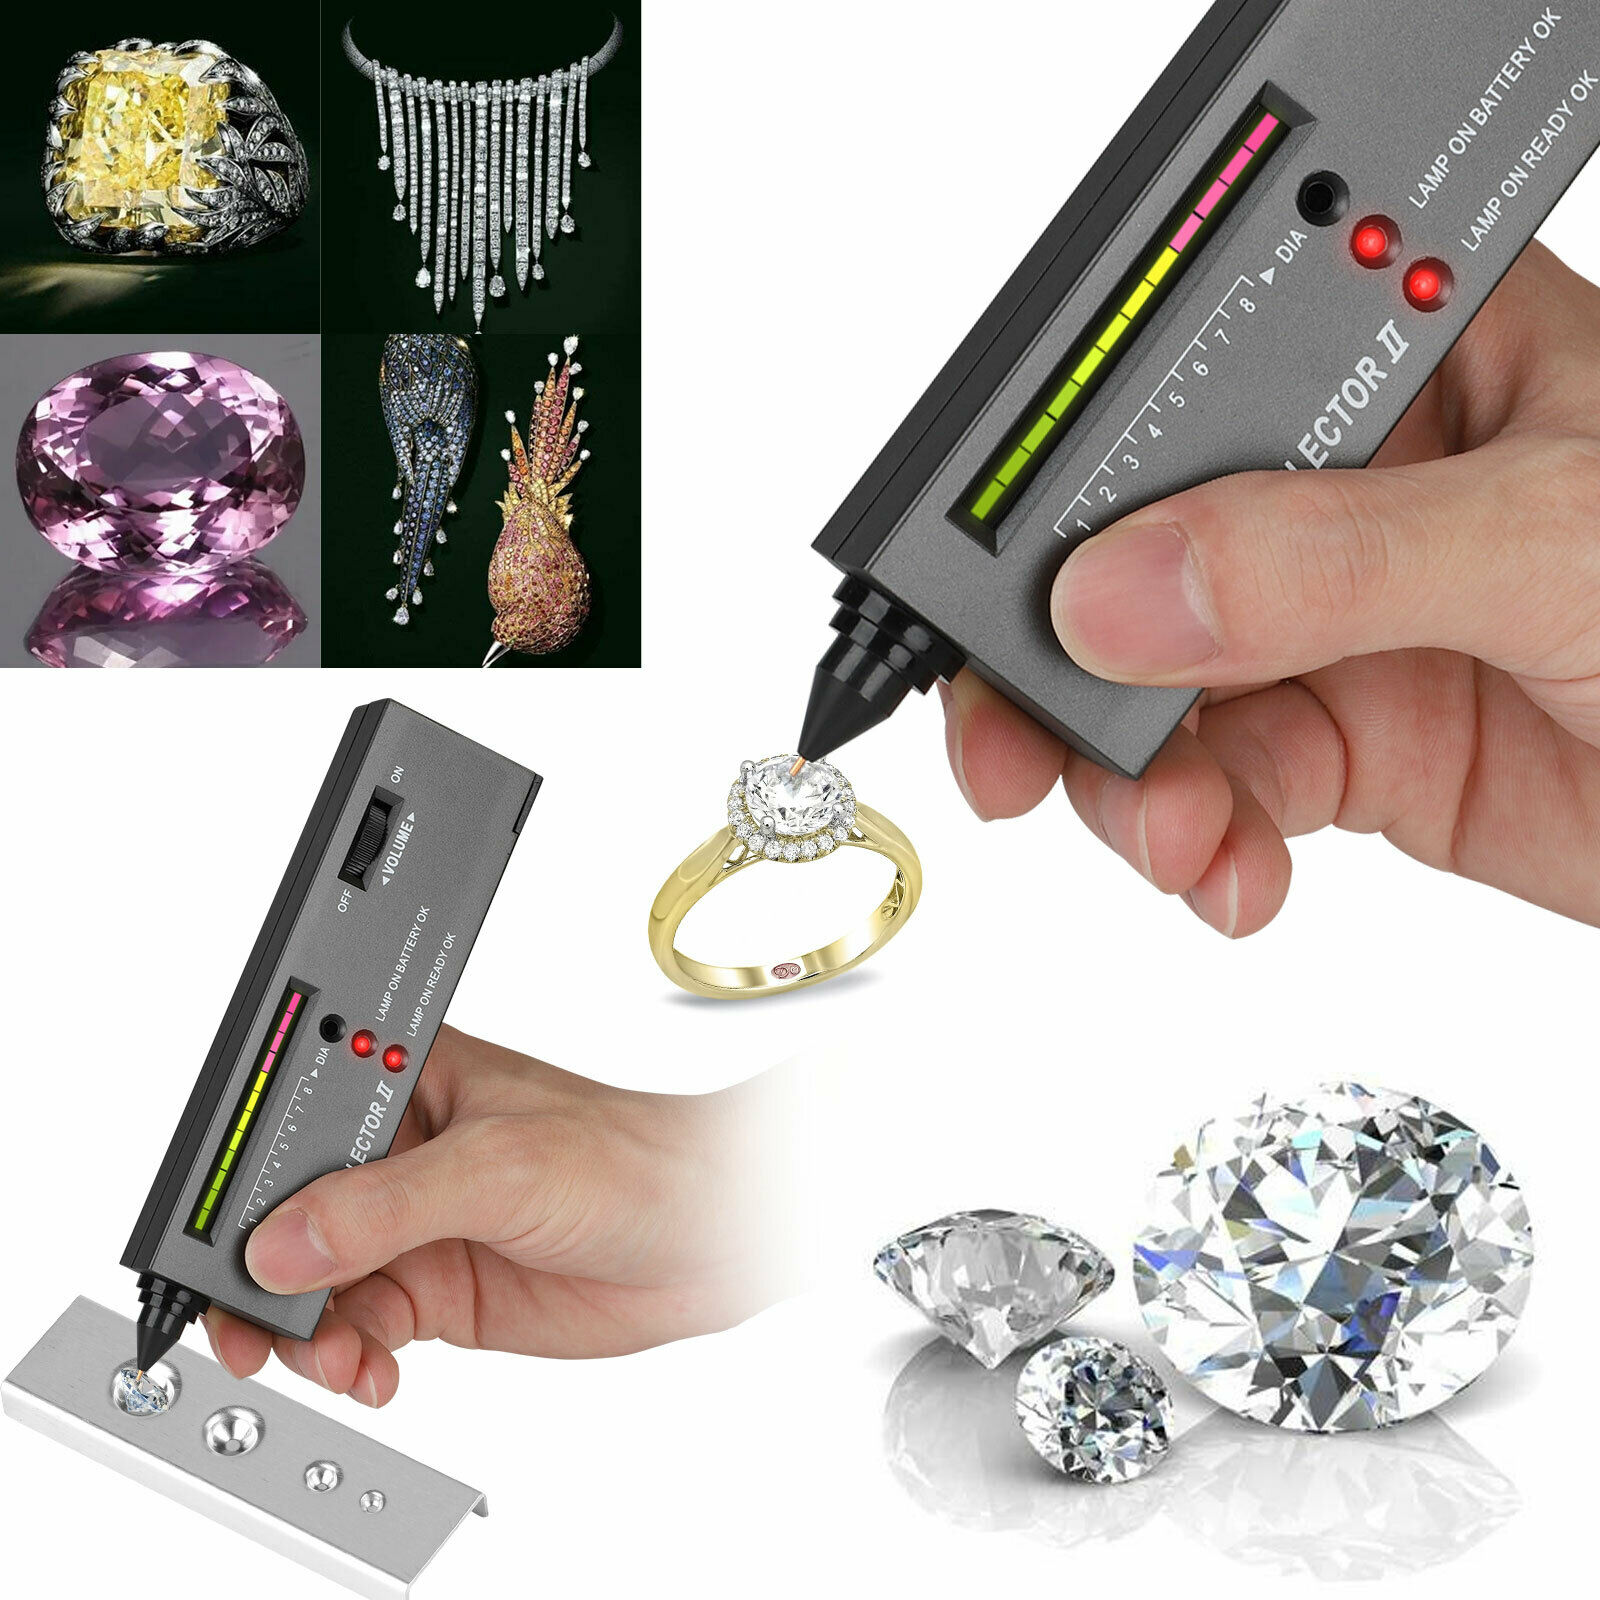 Gold Silver Diamond Tester Selector Gemstone Testing Kit Digital Electronic Tool